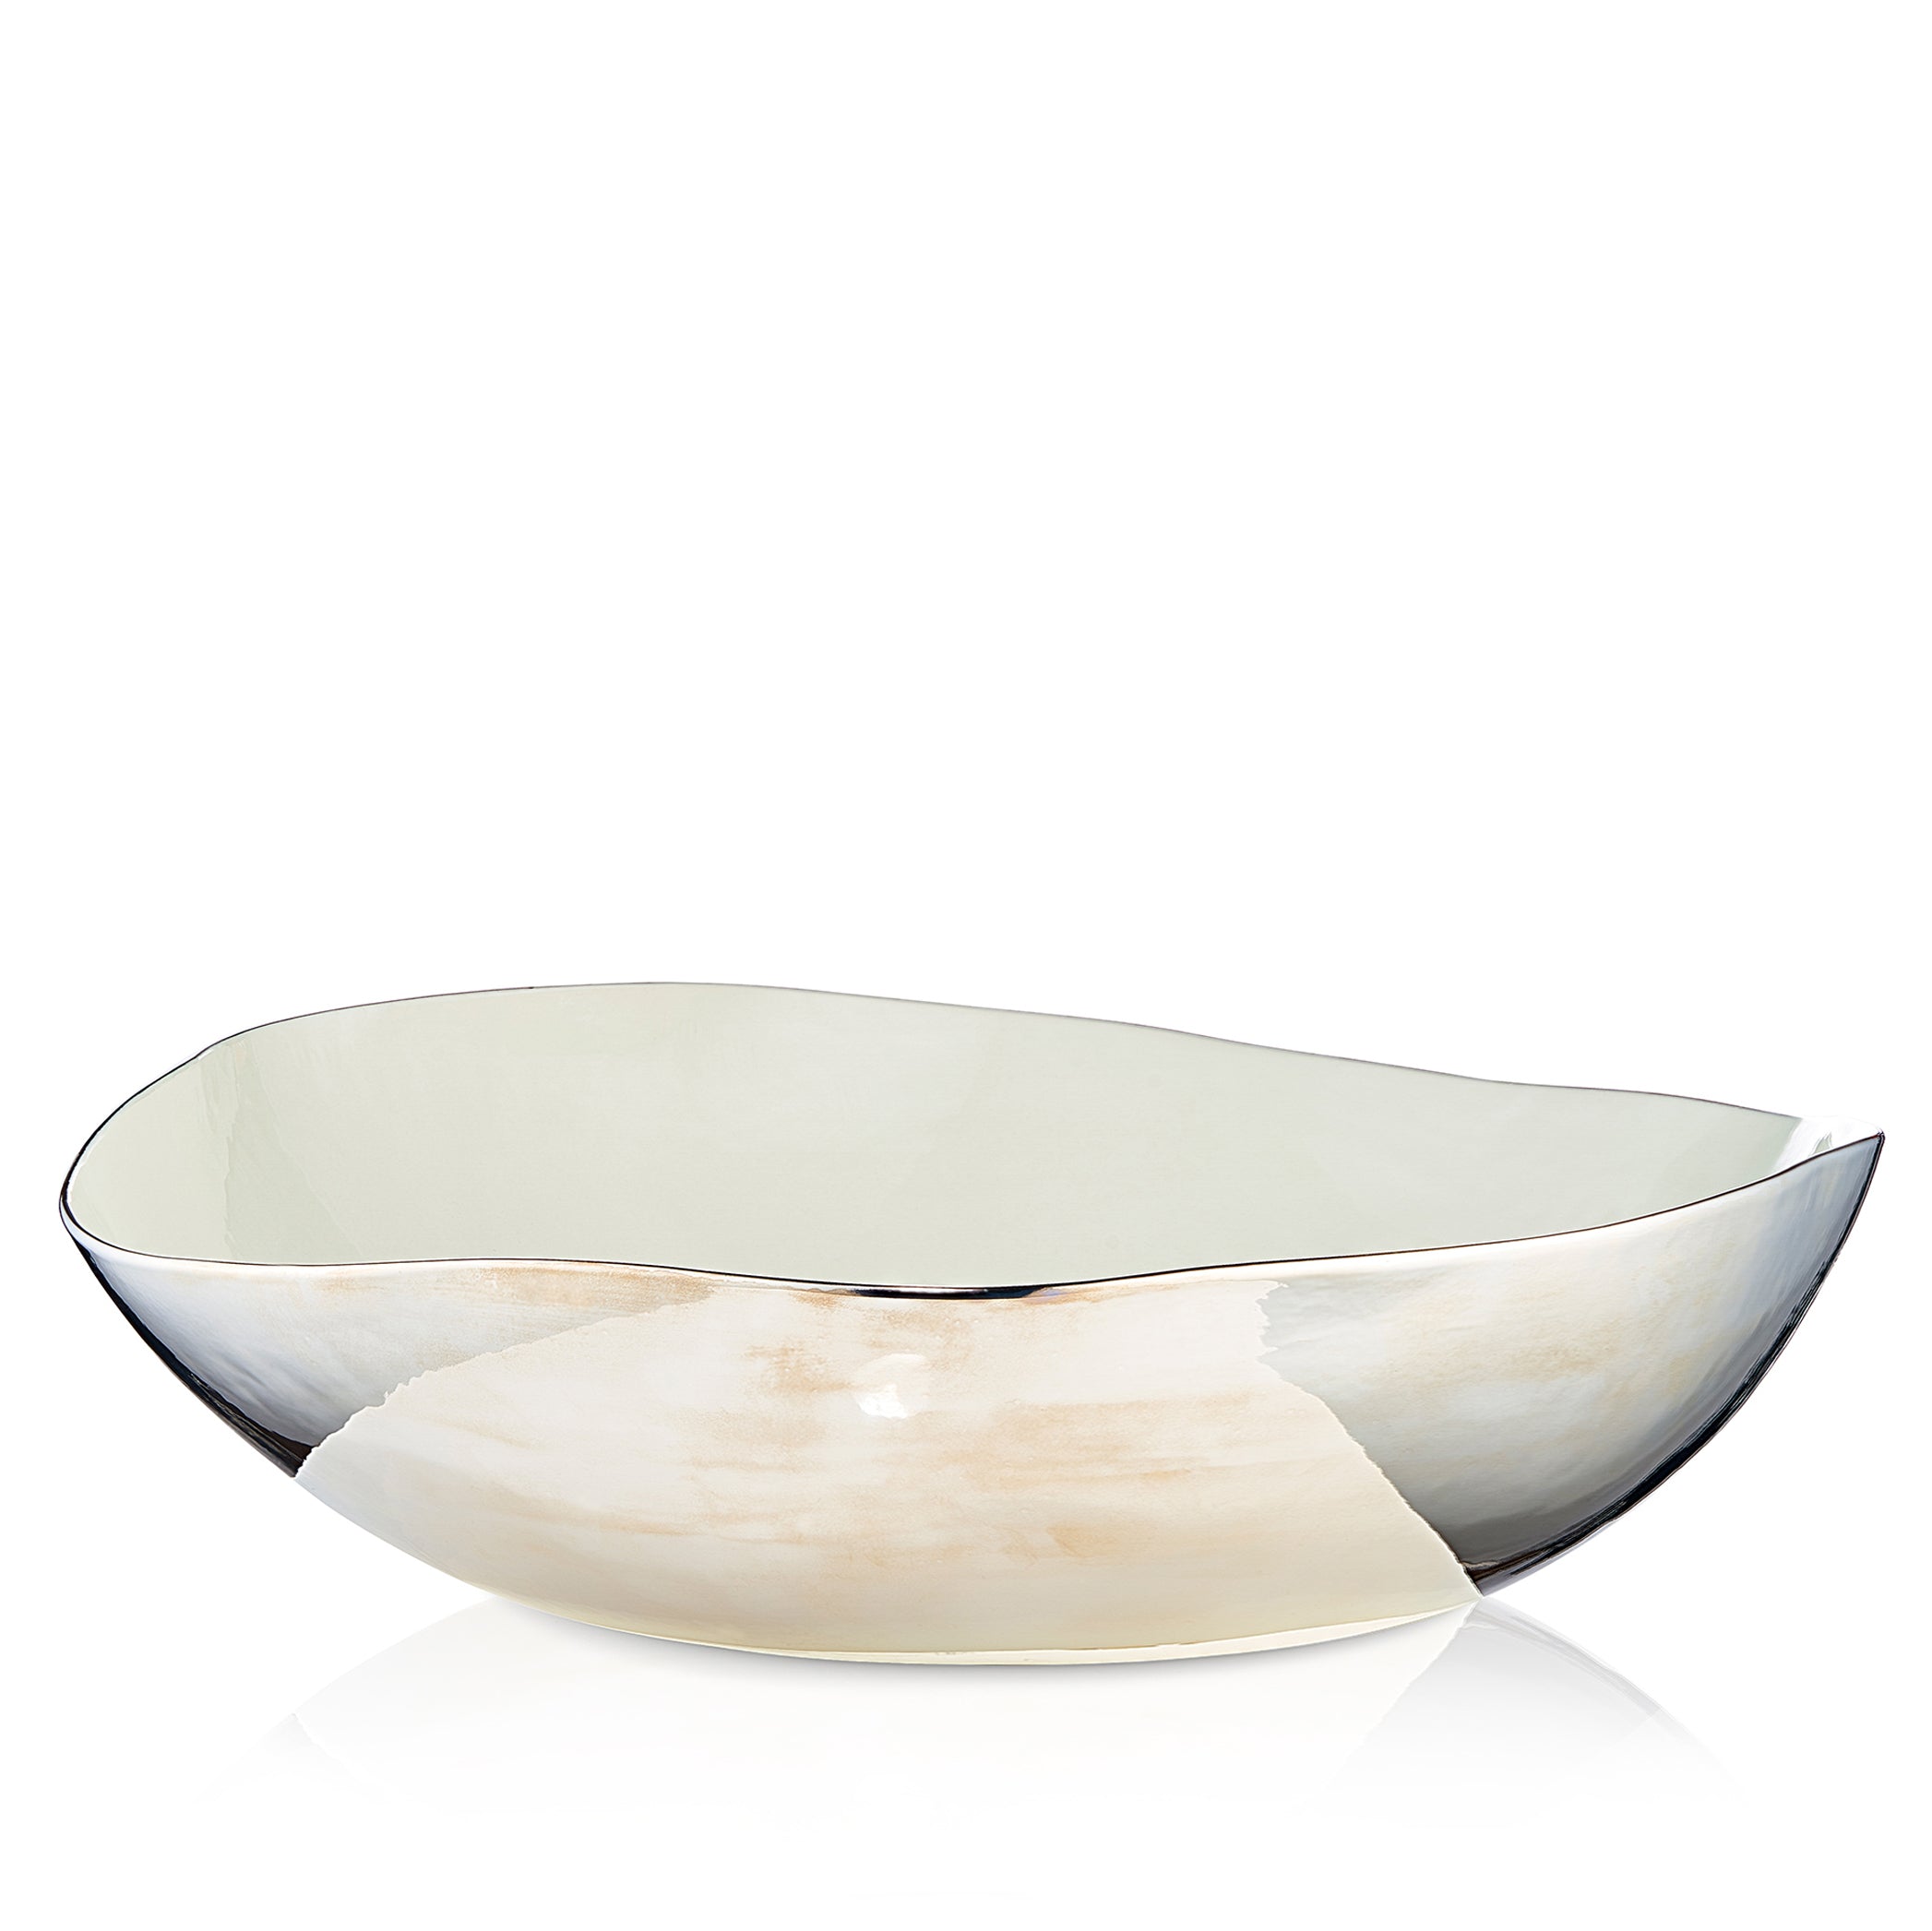 Handmade Round Ceramic Salad Serving Bowl in Silver Exterior Glaze, 43cm